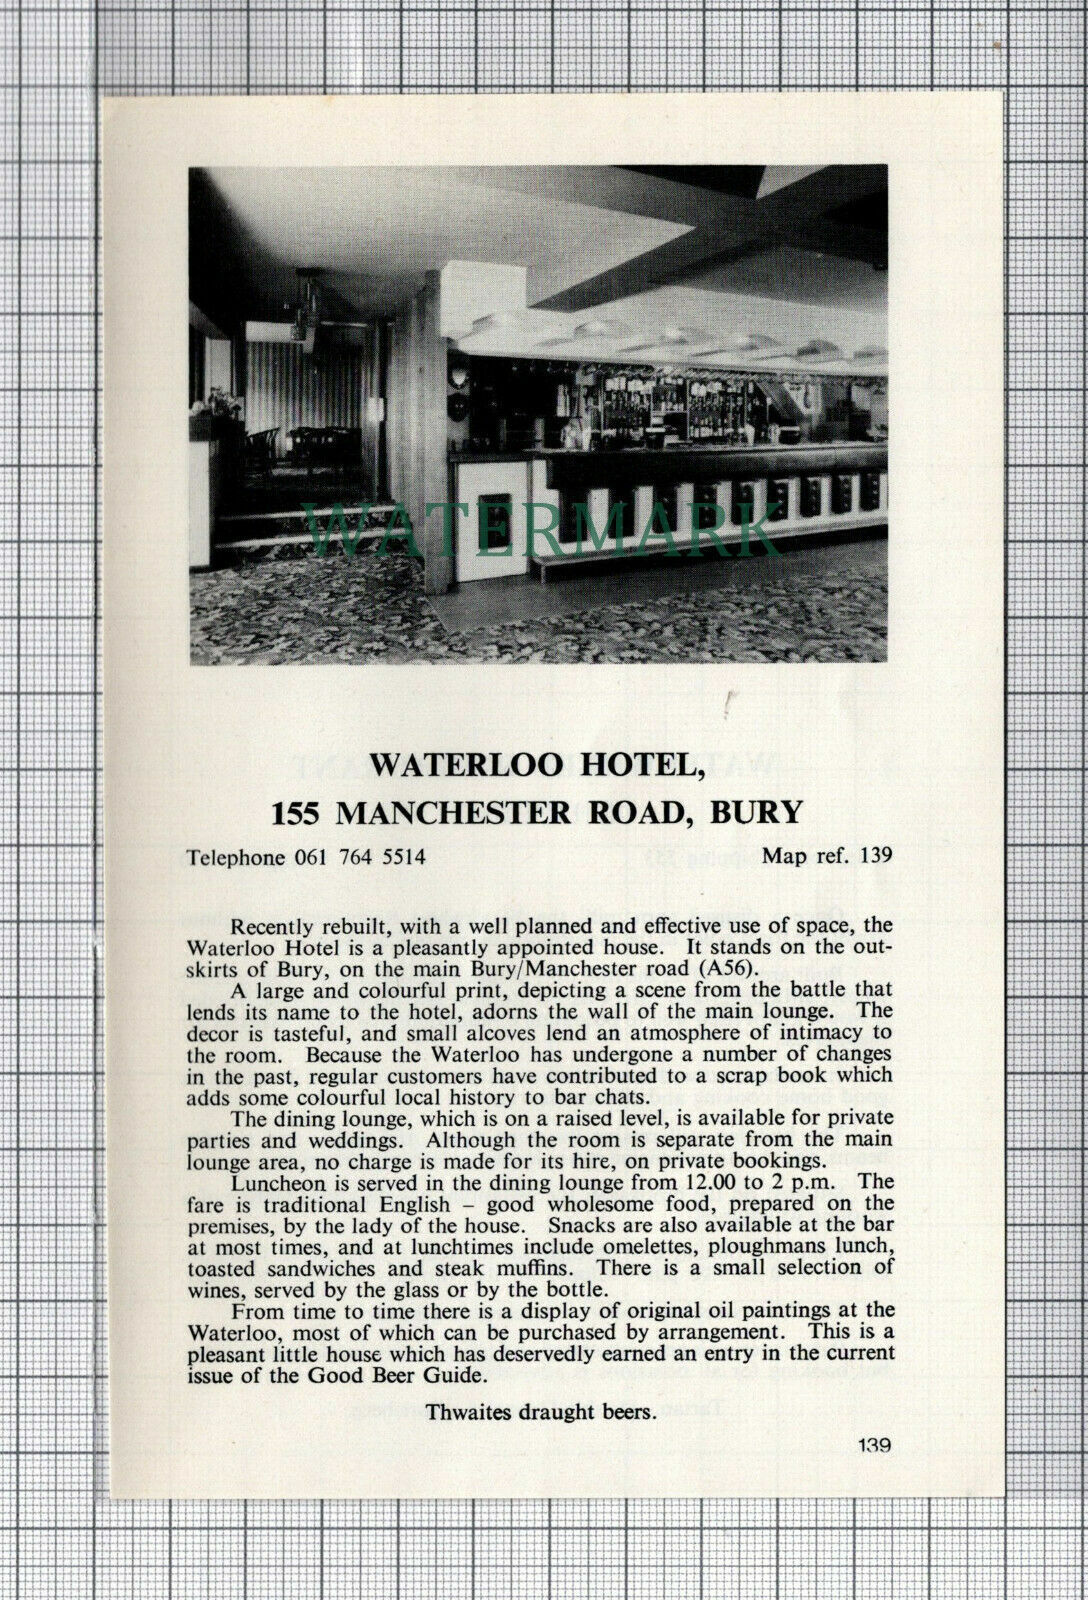 C7497) Waterloo Hotel Bury Waterwheel Restaurant Chipping - c.1970s Cutting